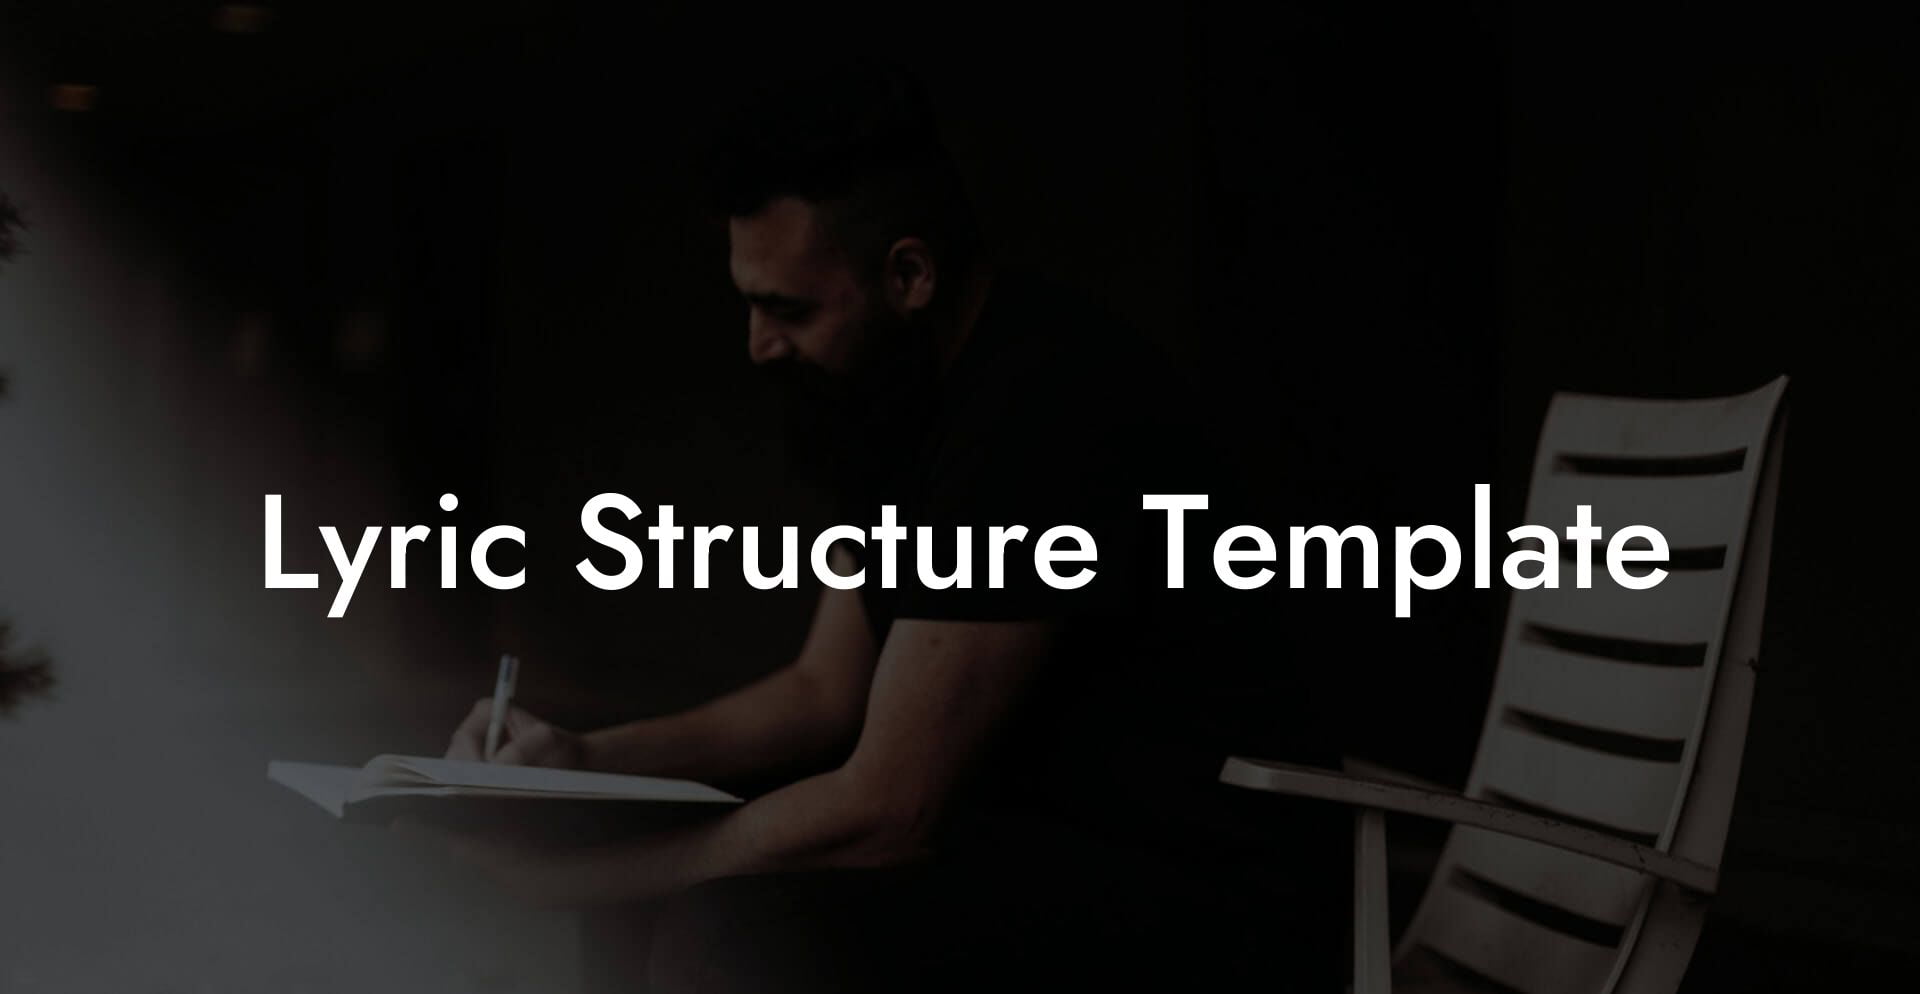 lyric structure template lyric assistant